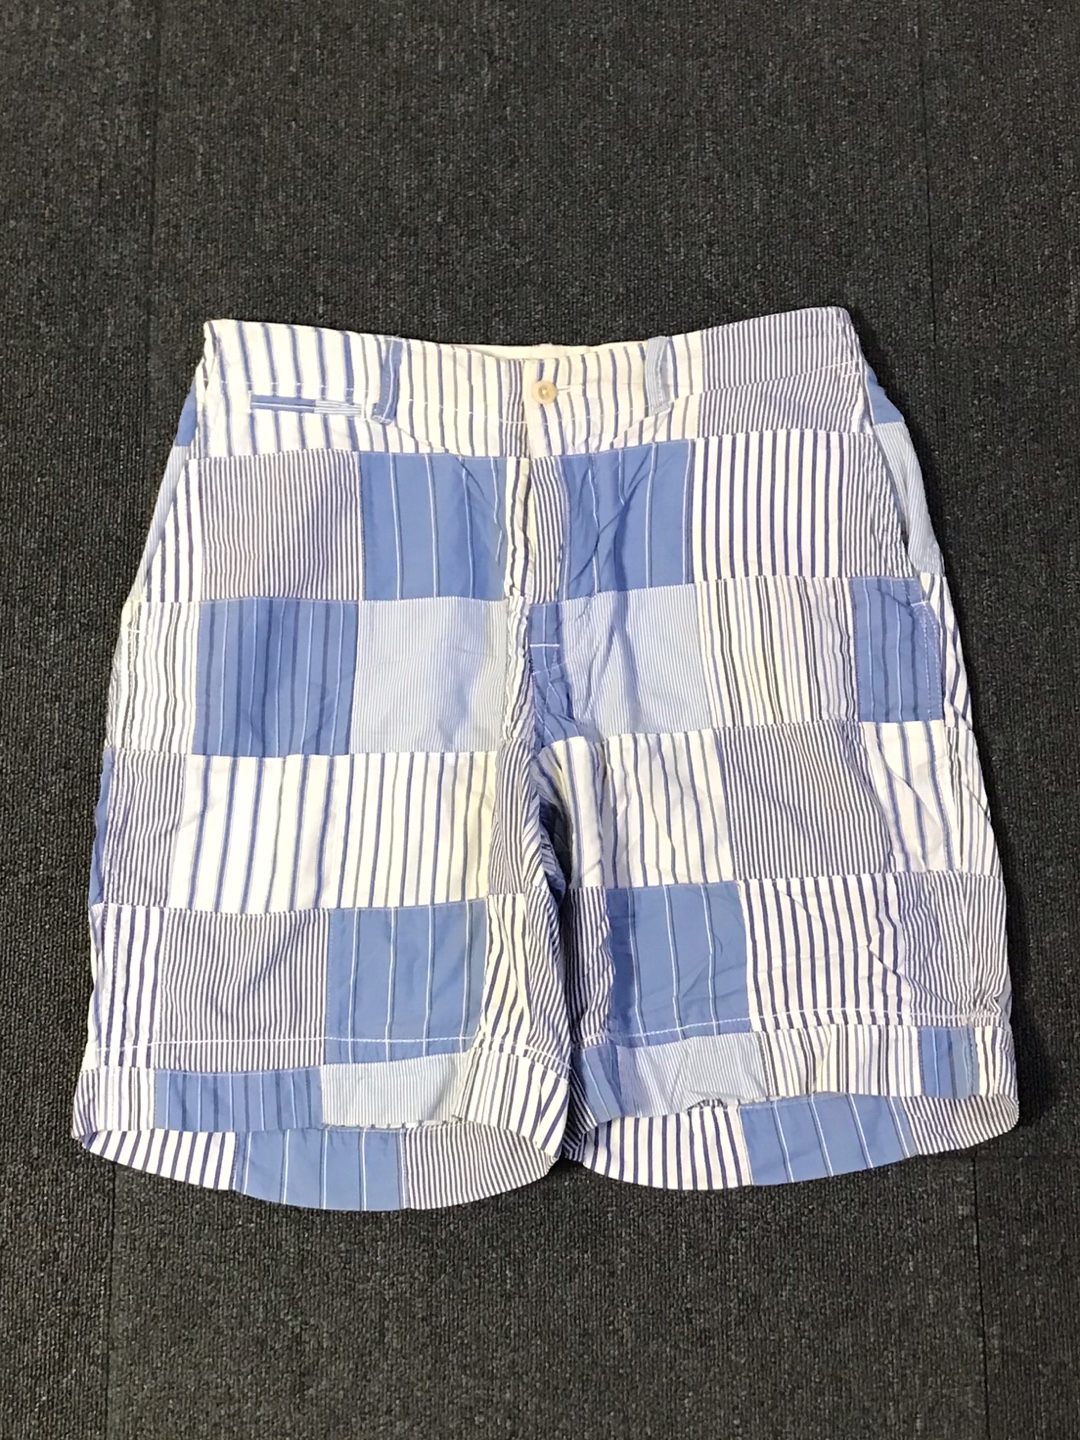 Polo RL cotton multi stripe patchwork side adjustable shorts (34 size,